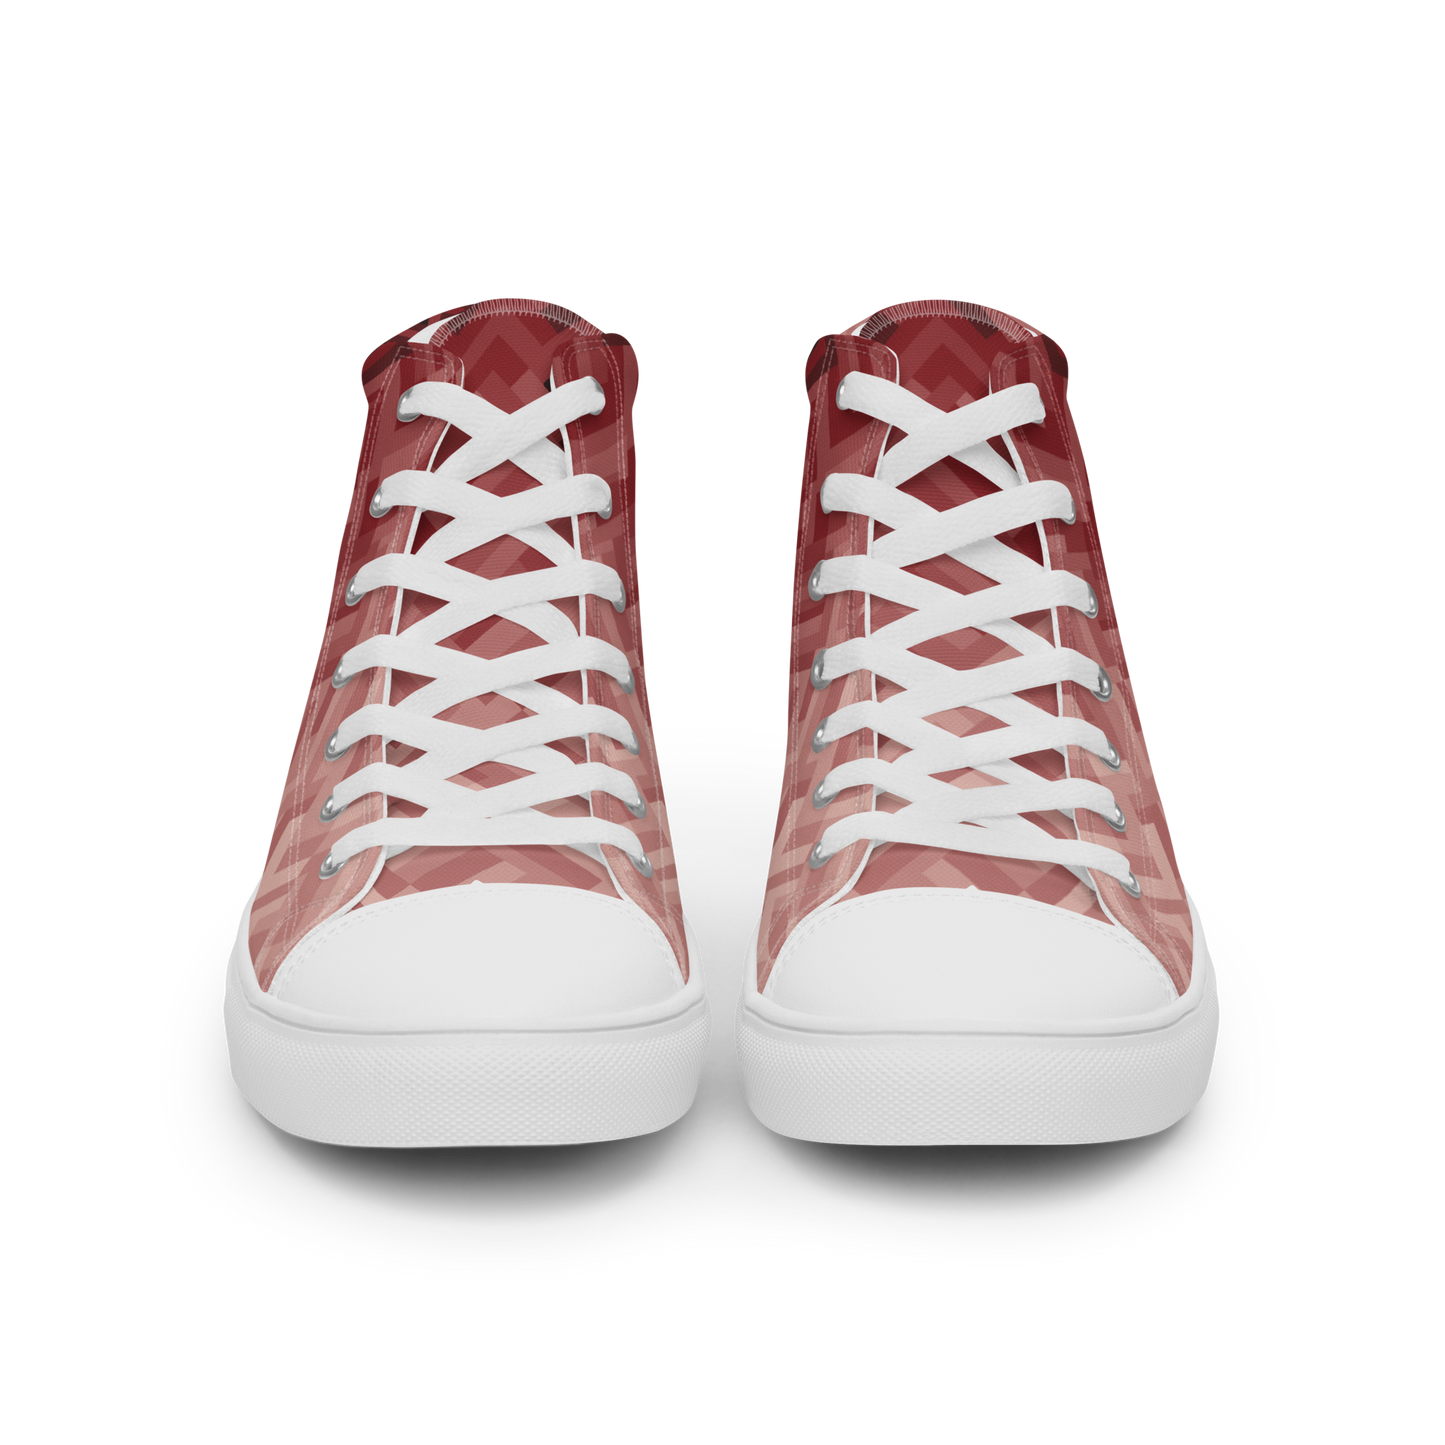 Men's Canvas Sneakers ❯ Polygonal Gradient ❯ Ruby Red